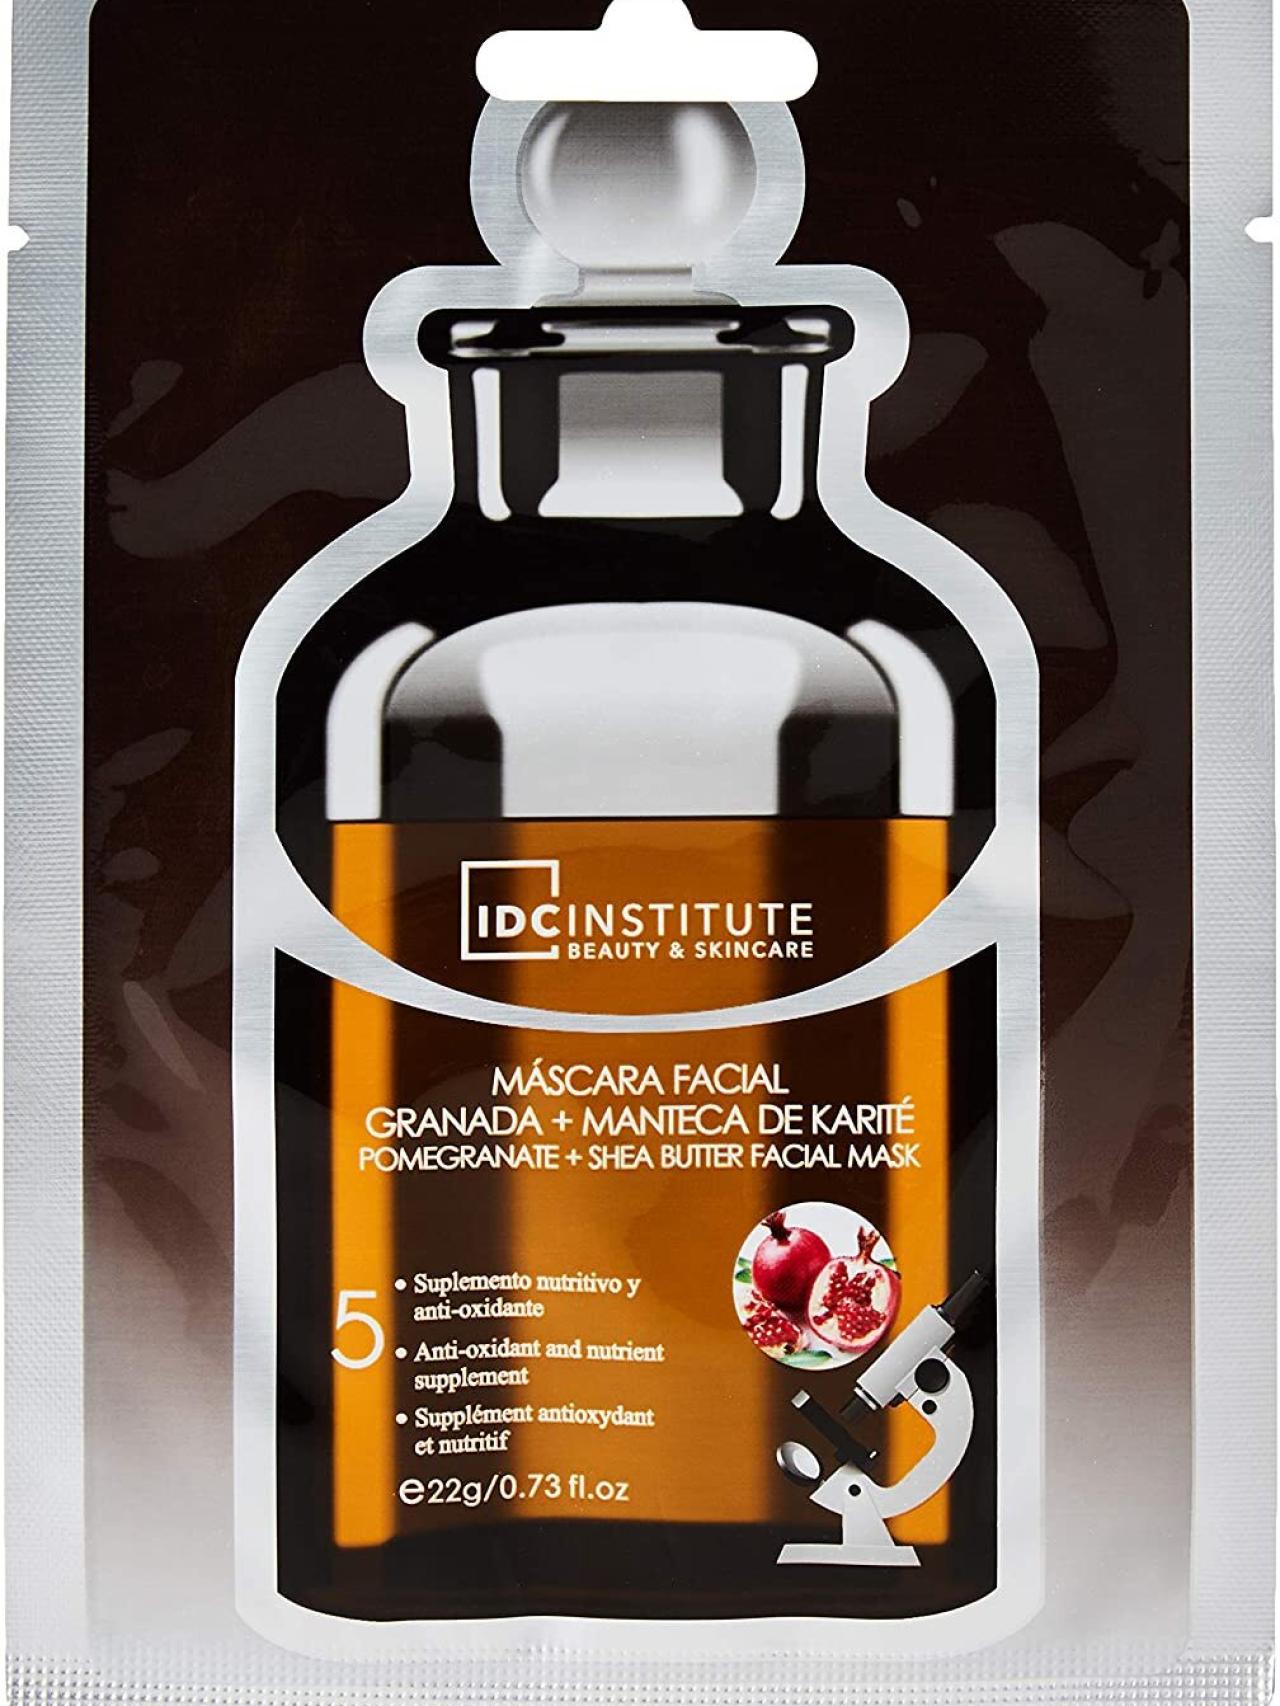 Mascarilla hidratante de IDC Institute.